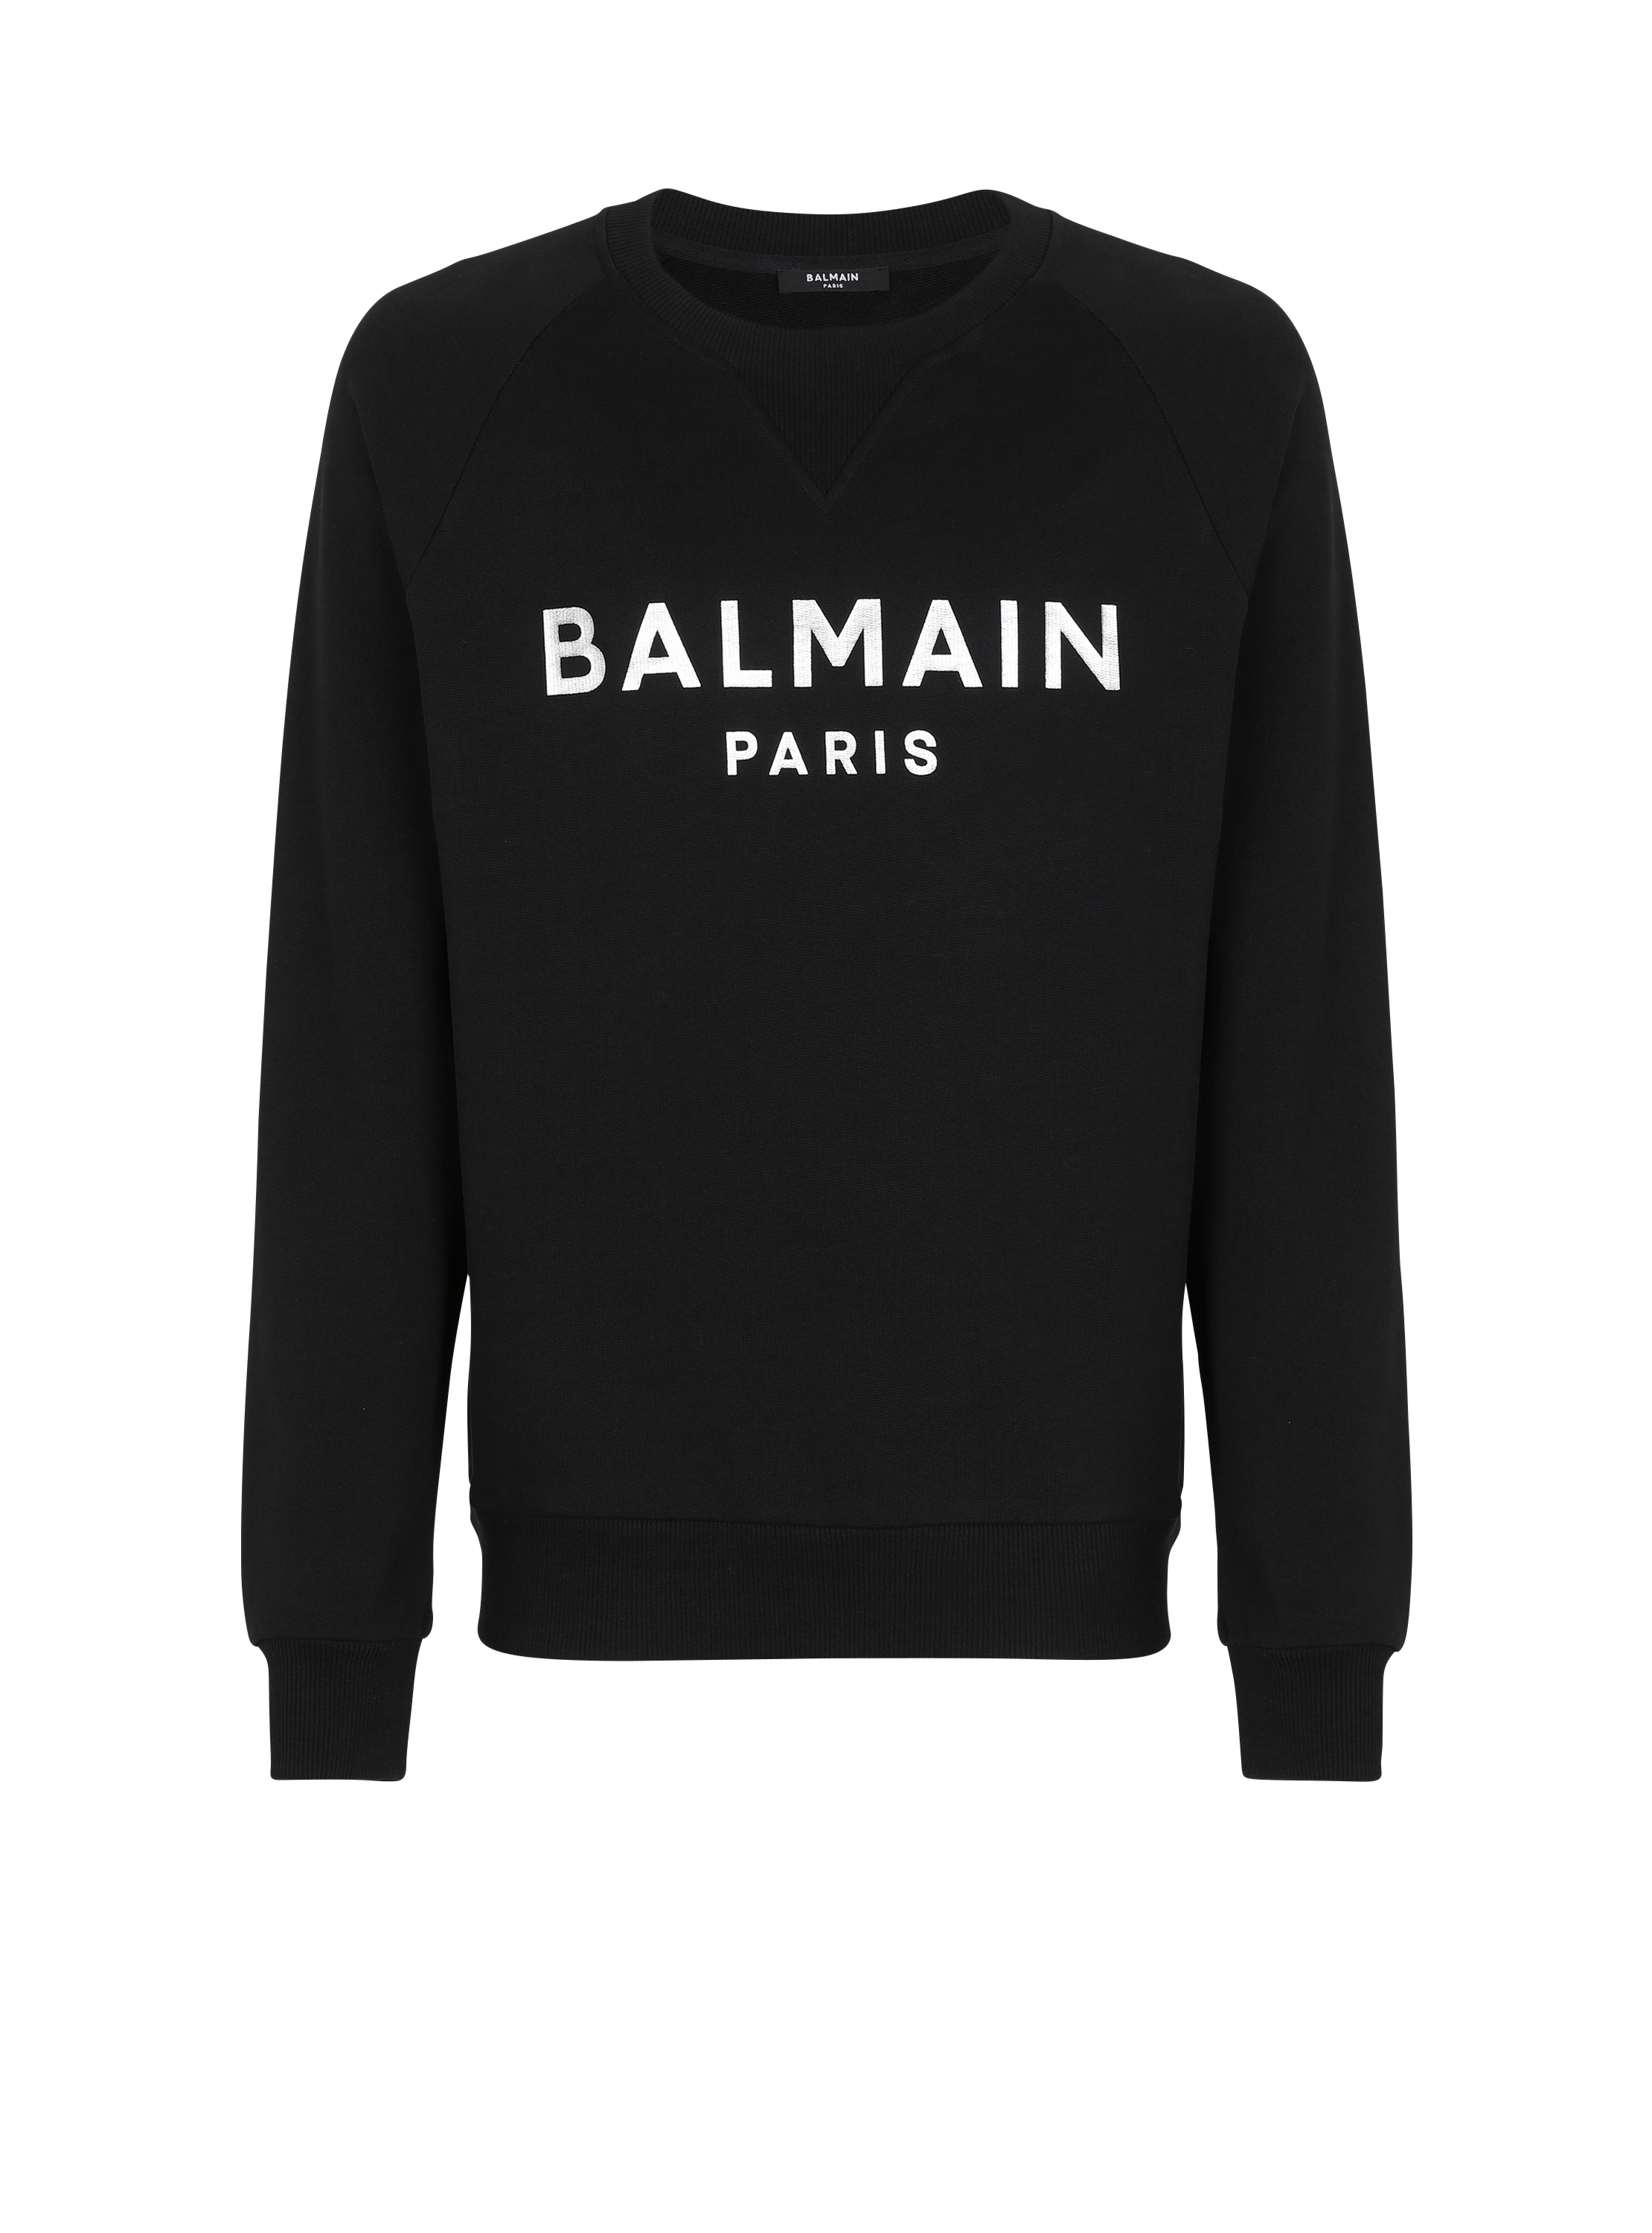 Sweatshirt in eco-responsible cotton with Balmain metallic logo print, black, hi-res